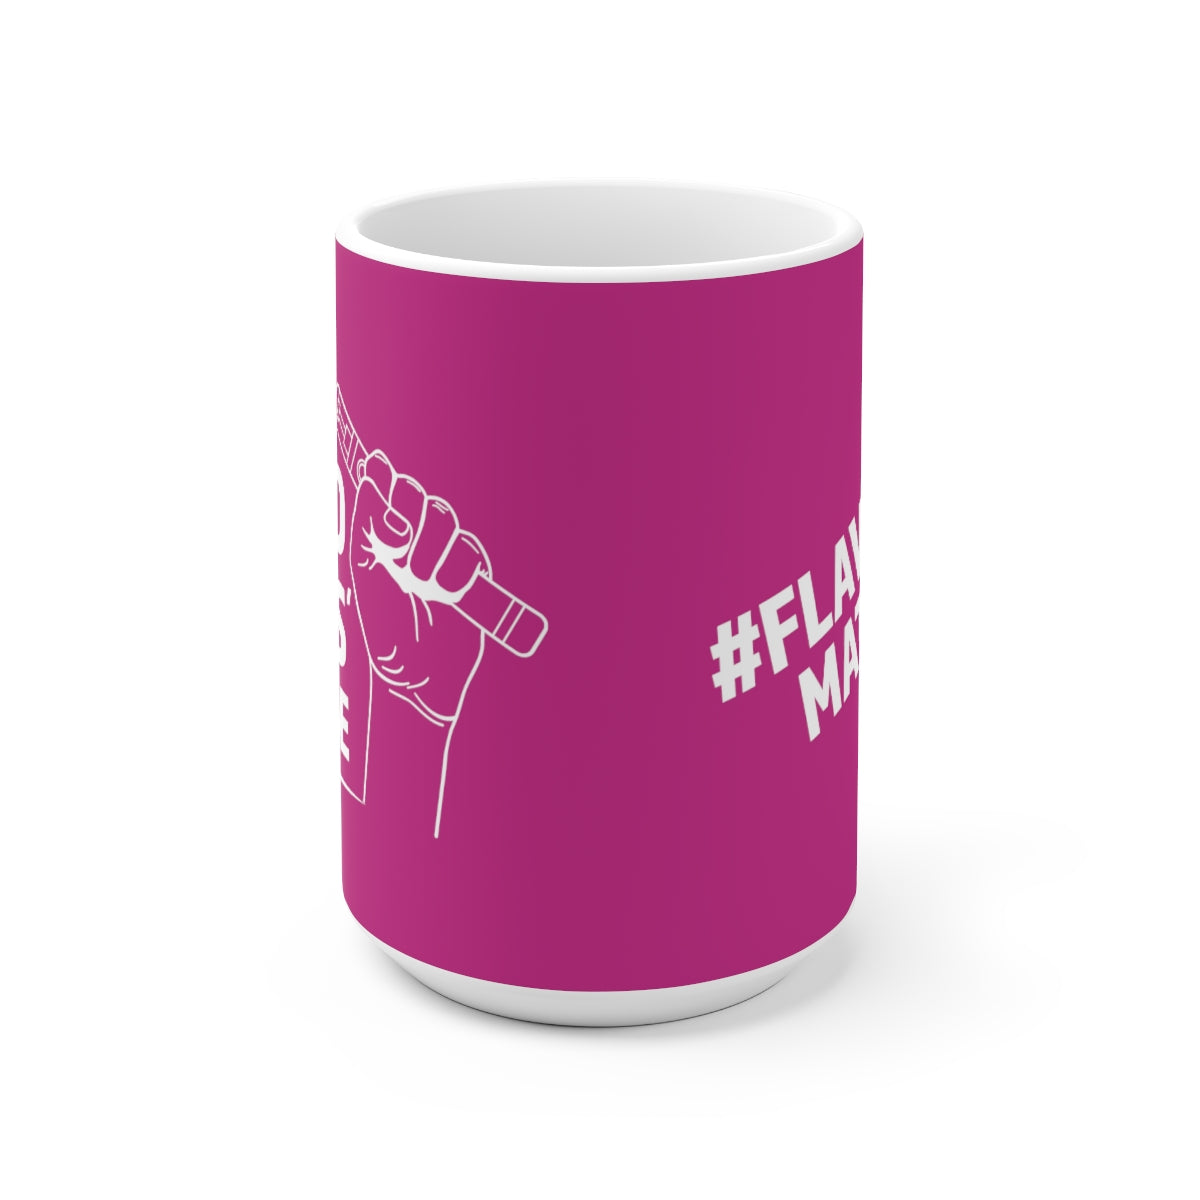 WVA Flavours Matter Pink Ceramic Mug (EU only)